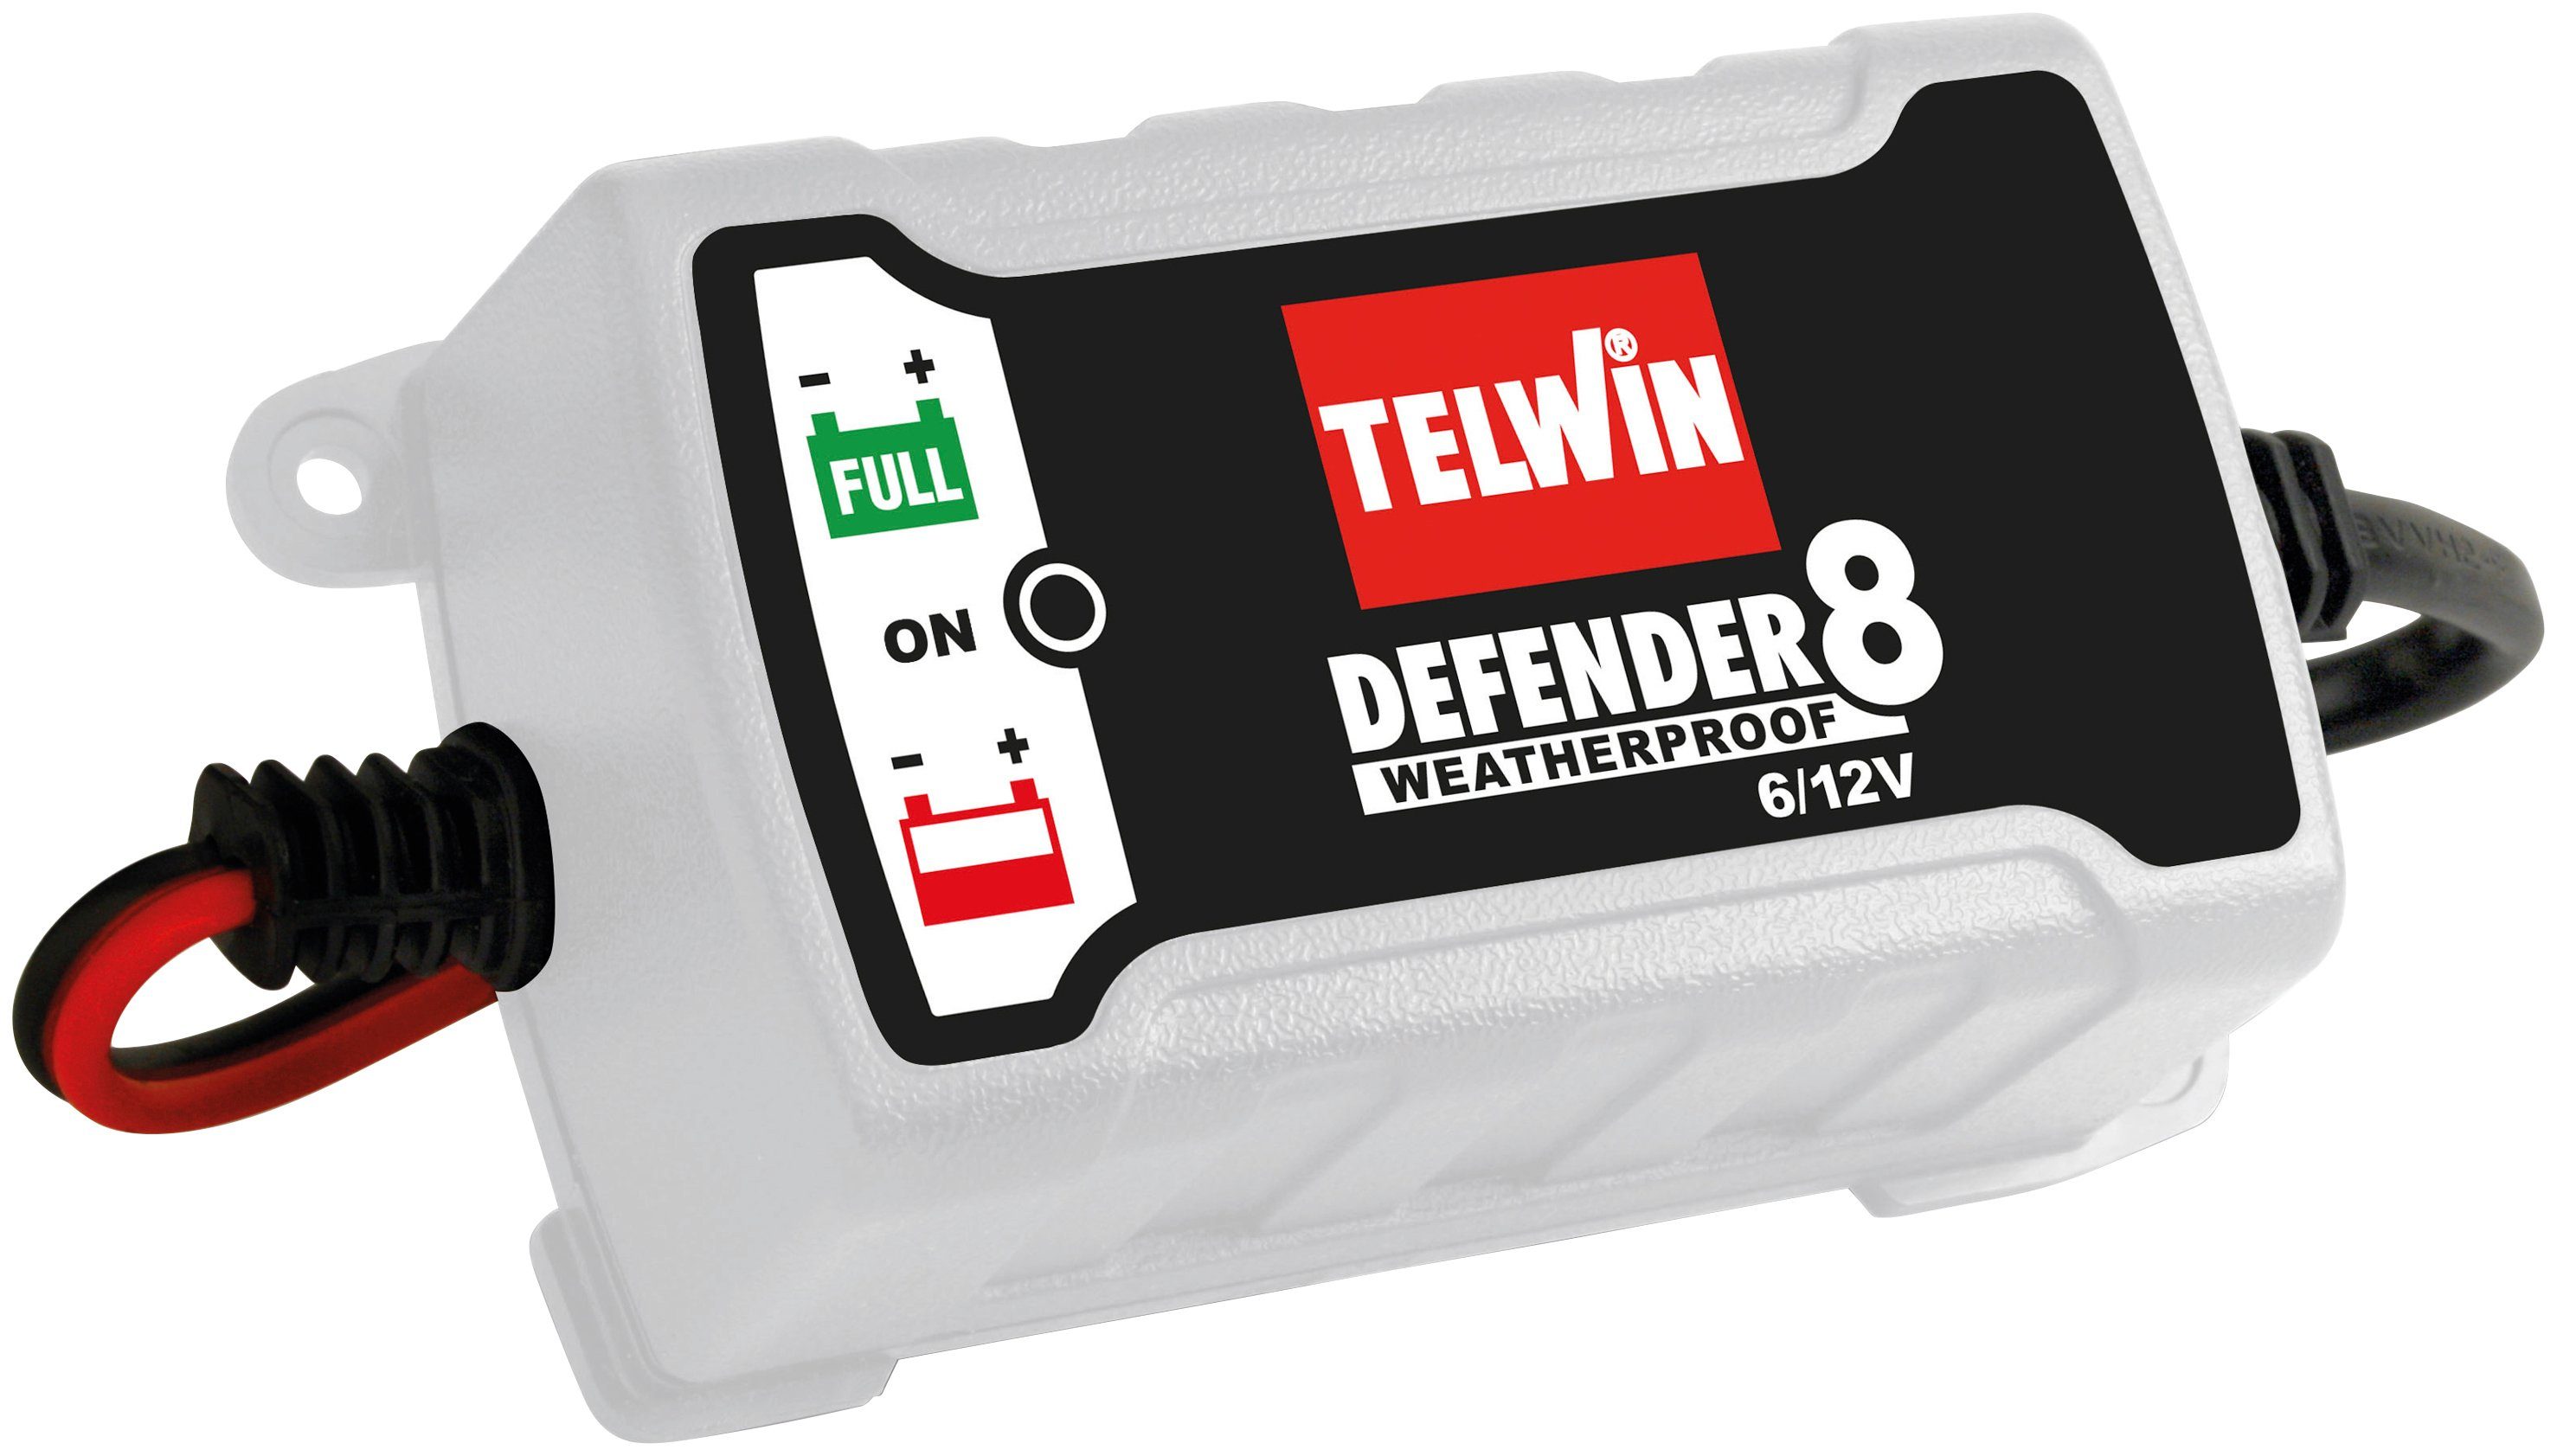 TELWIN DEFENDER 12 Autobatterie-Ladegerät (Spannung: A) 12V, 2/4 6V Ladestrom: 